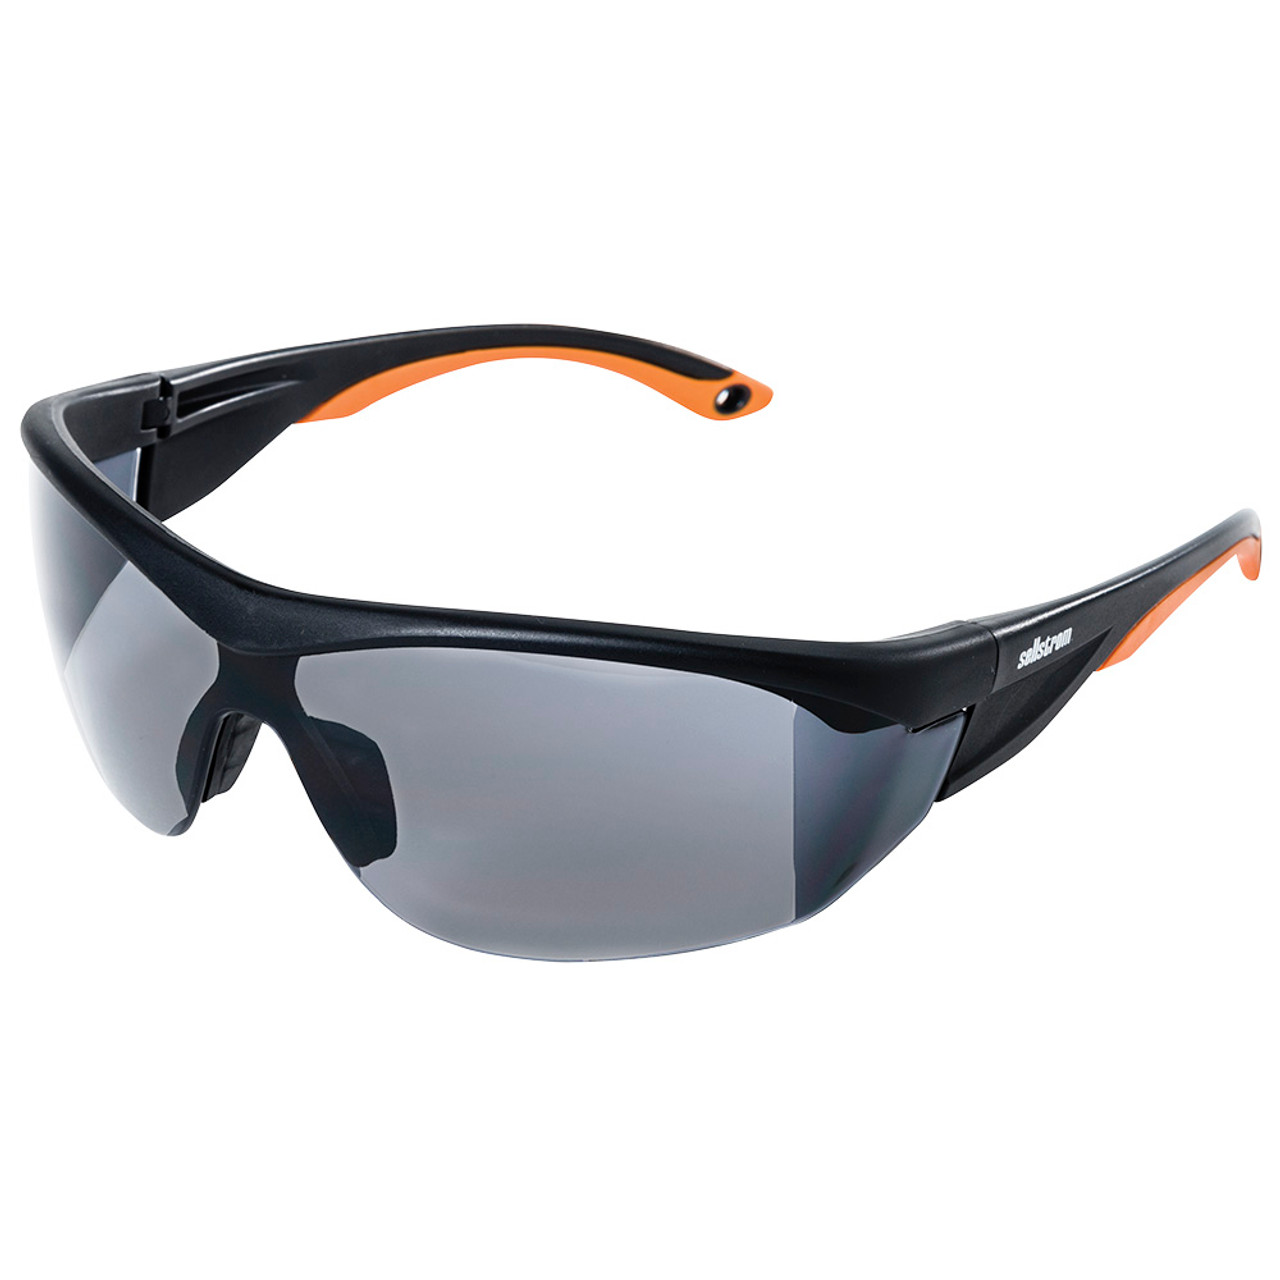 Sellstrom® XM320 Series Hard Coated Wrap Around Safety Glasses - Smoke Tint - Orange-Black Arms  S71401